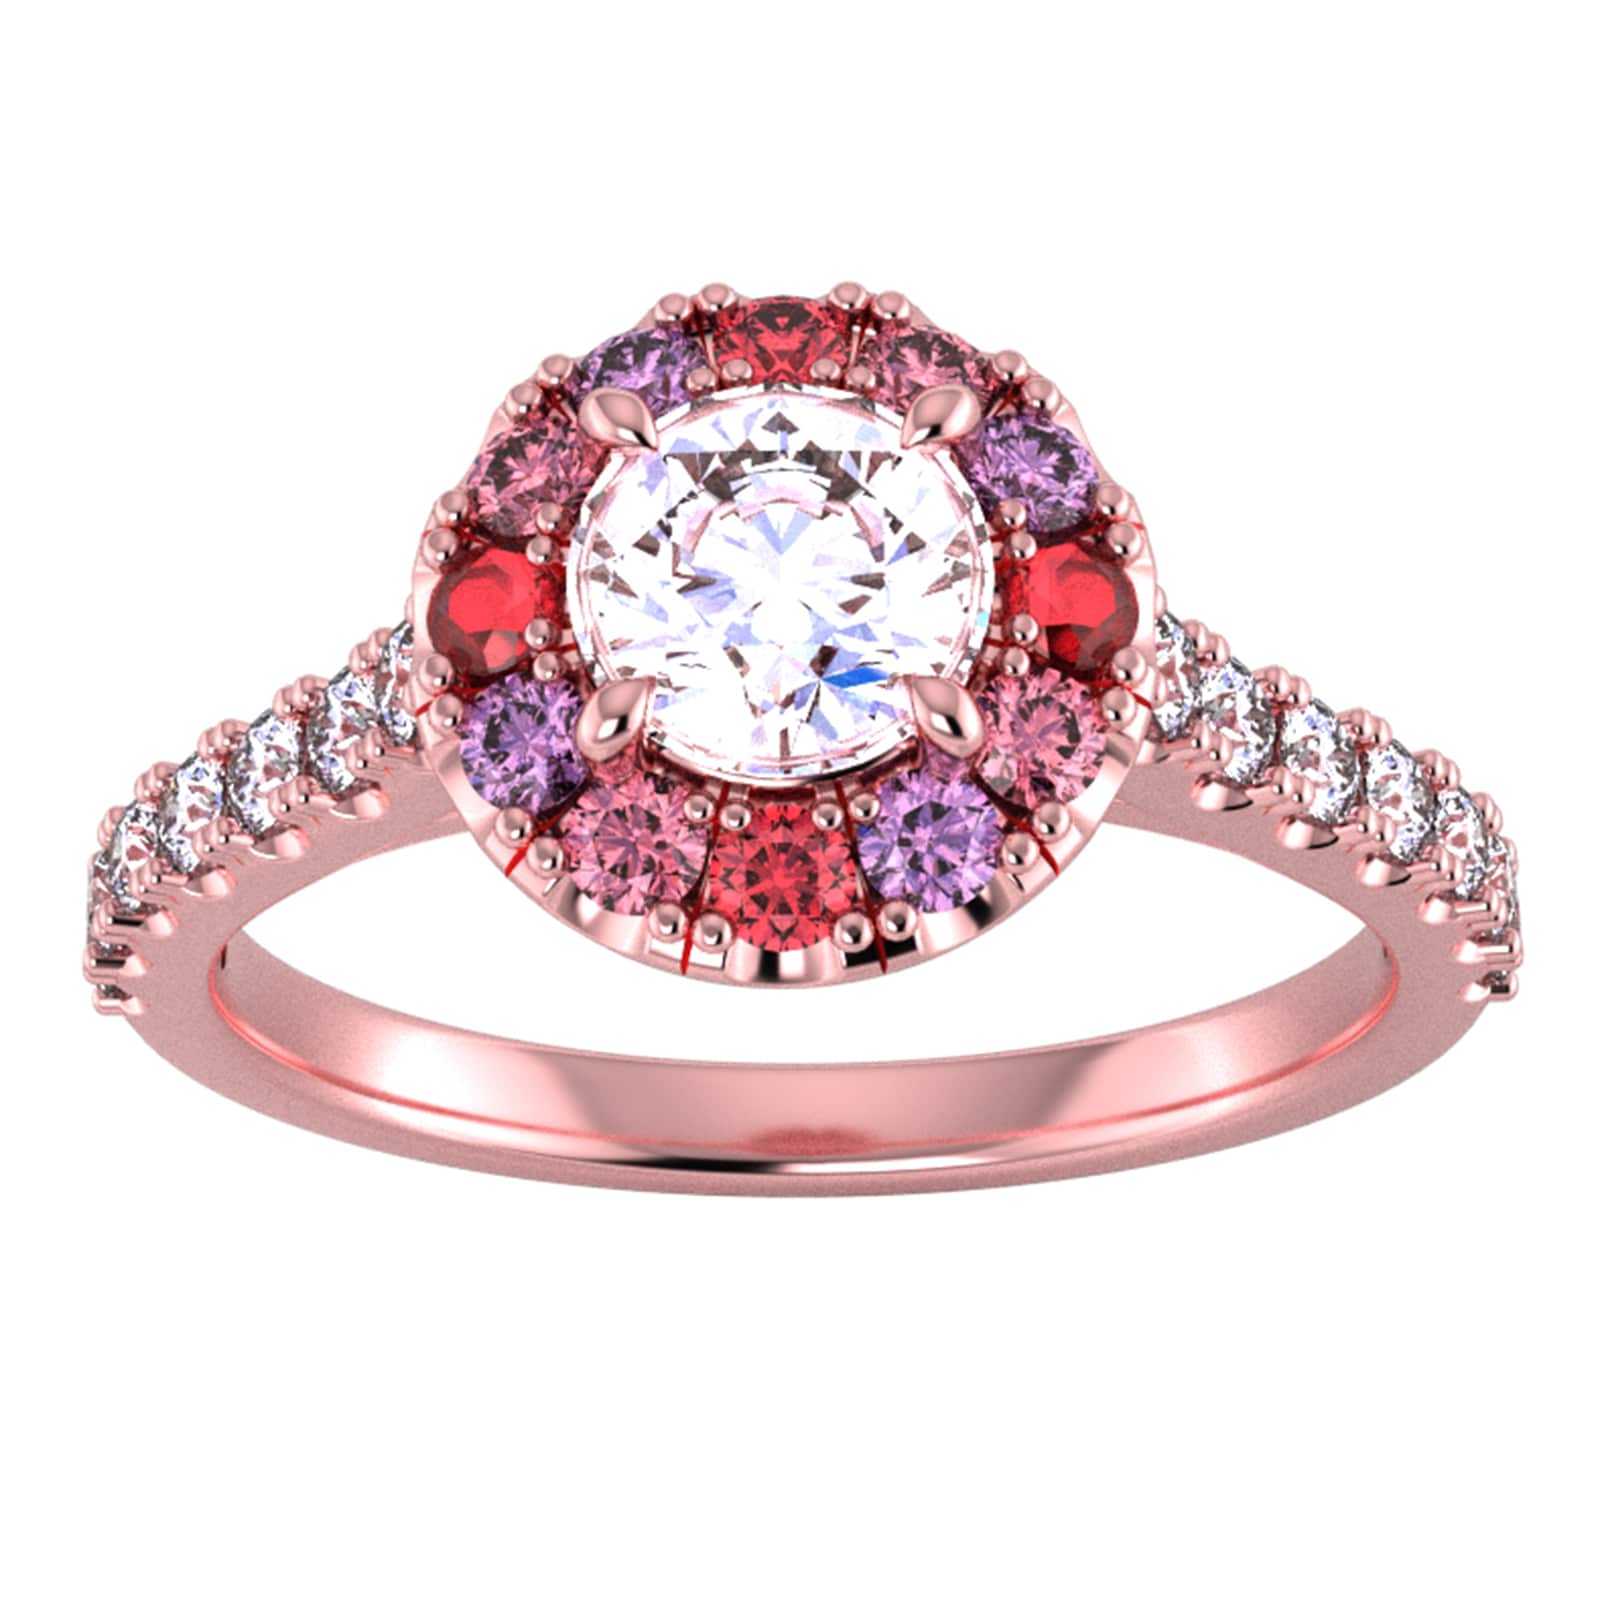 18ct Rose Gold Diamond & Pink, Red, Purple Sapphire Halo Ring - Ring Size U